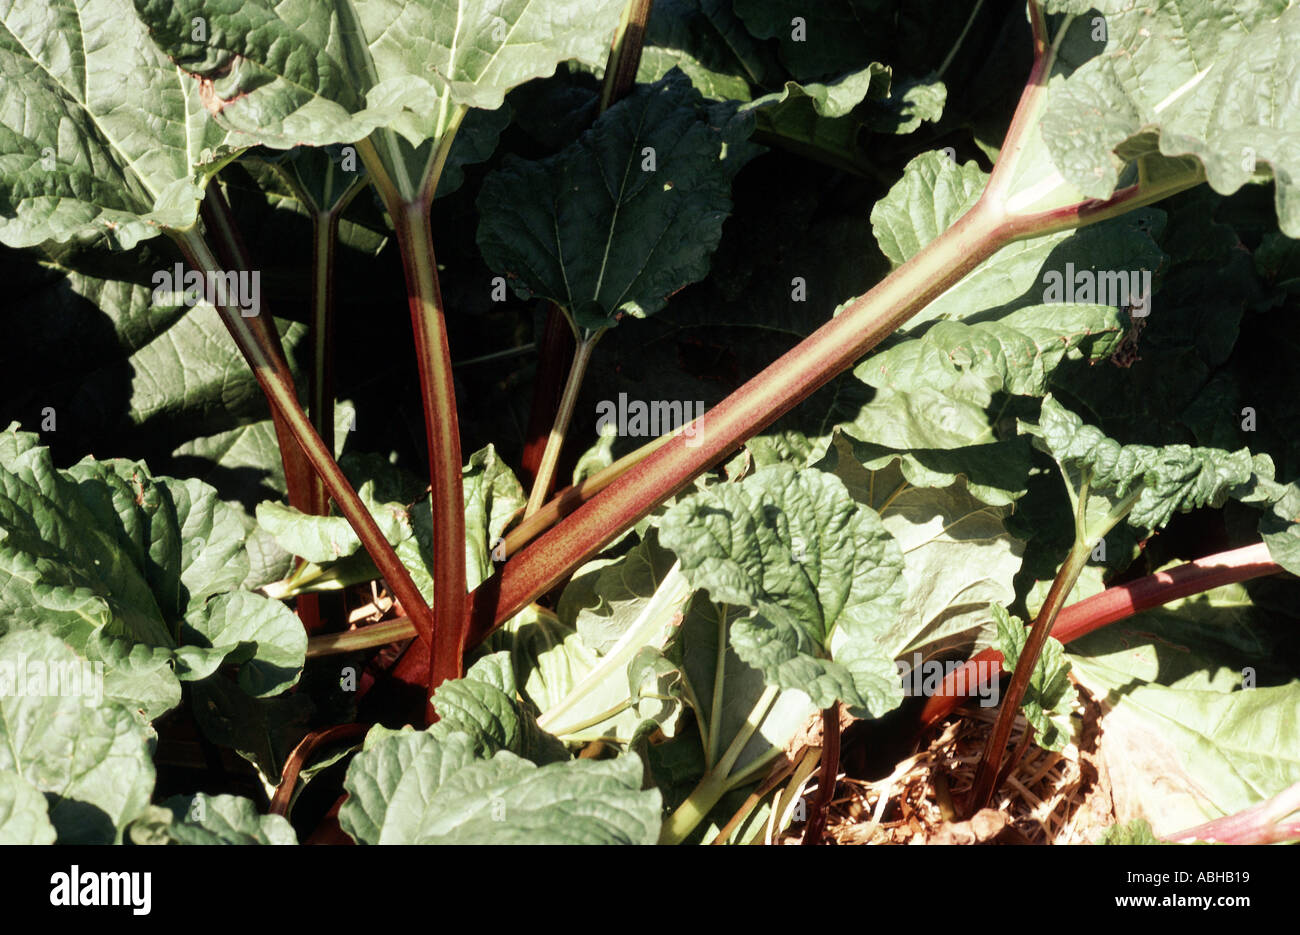 Rhubarb plant with stalks of ripening rhubarb Stock Photo